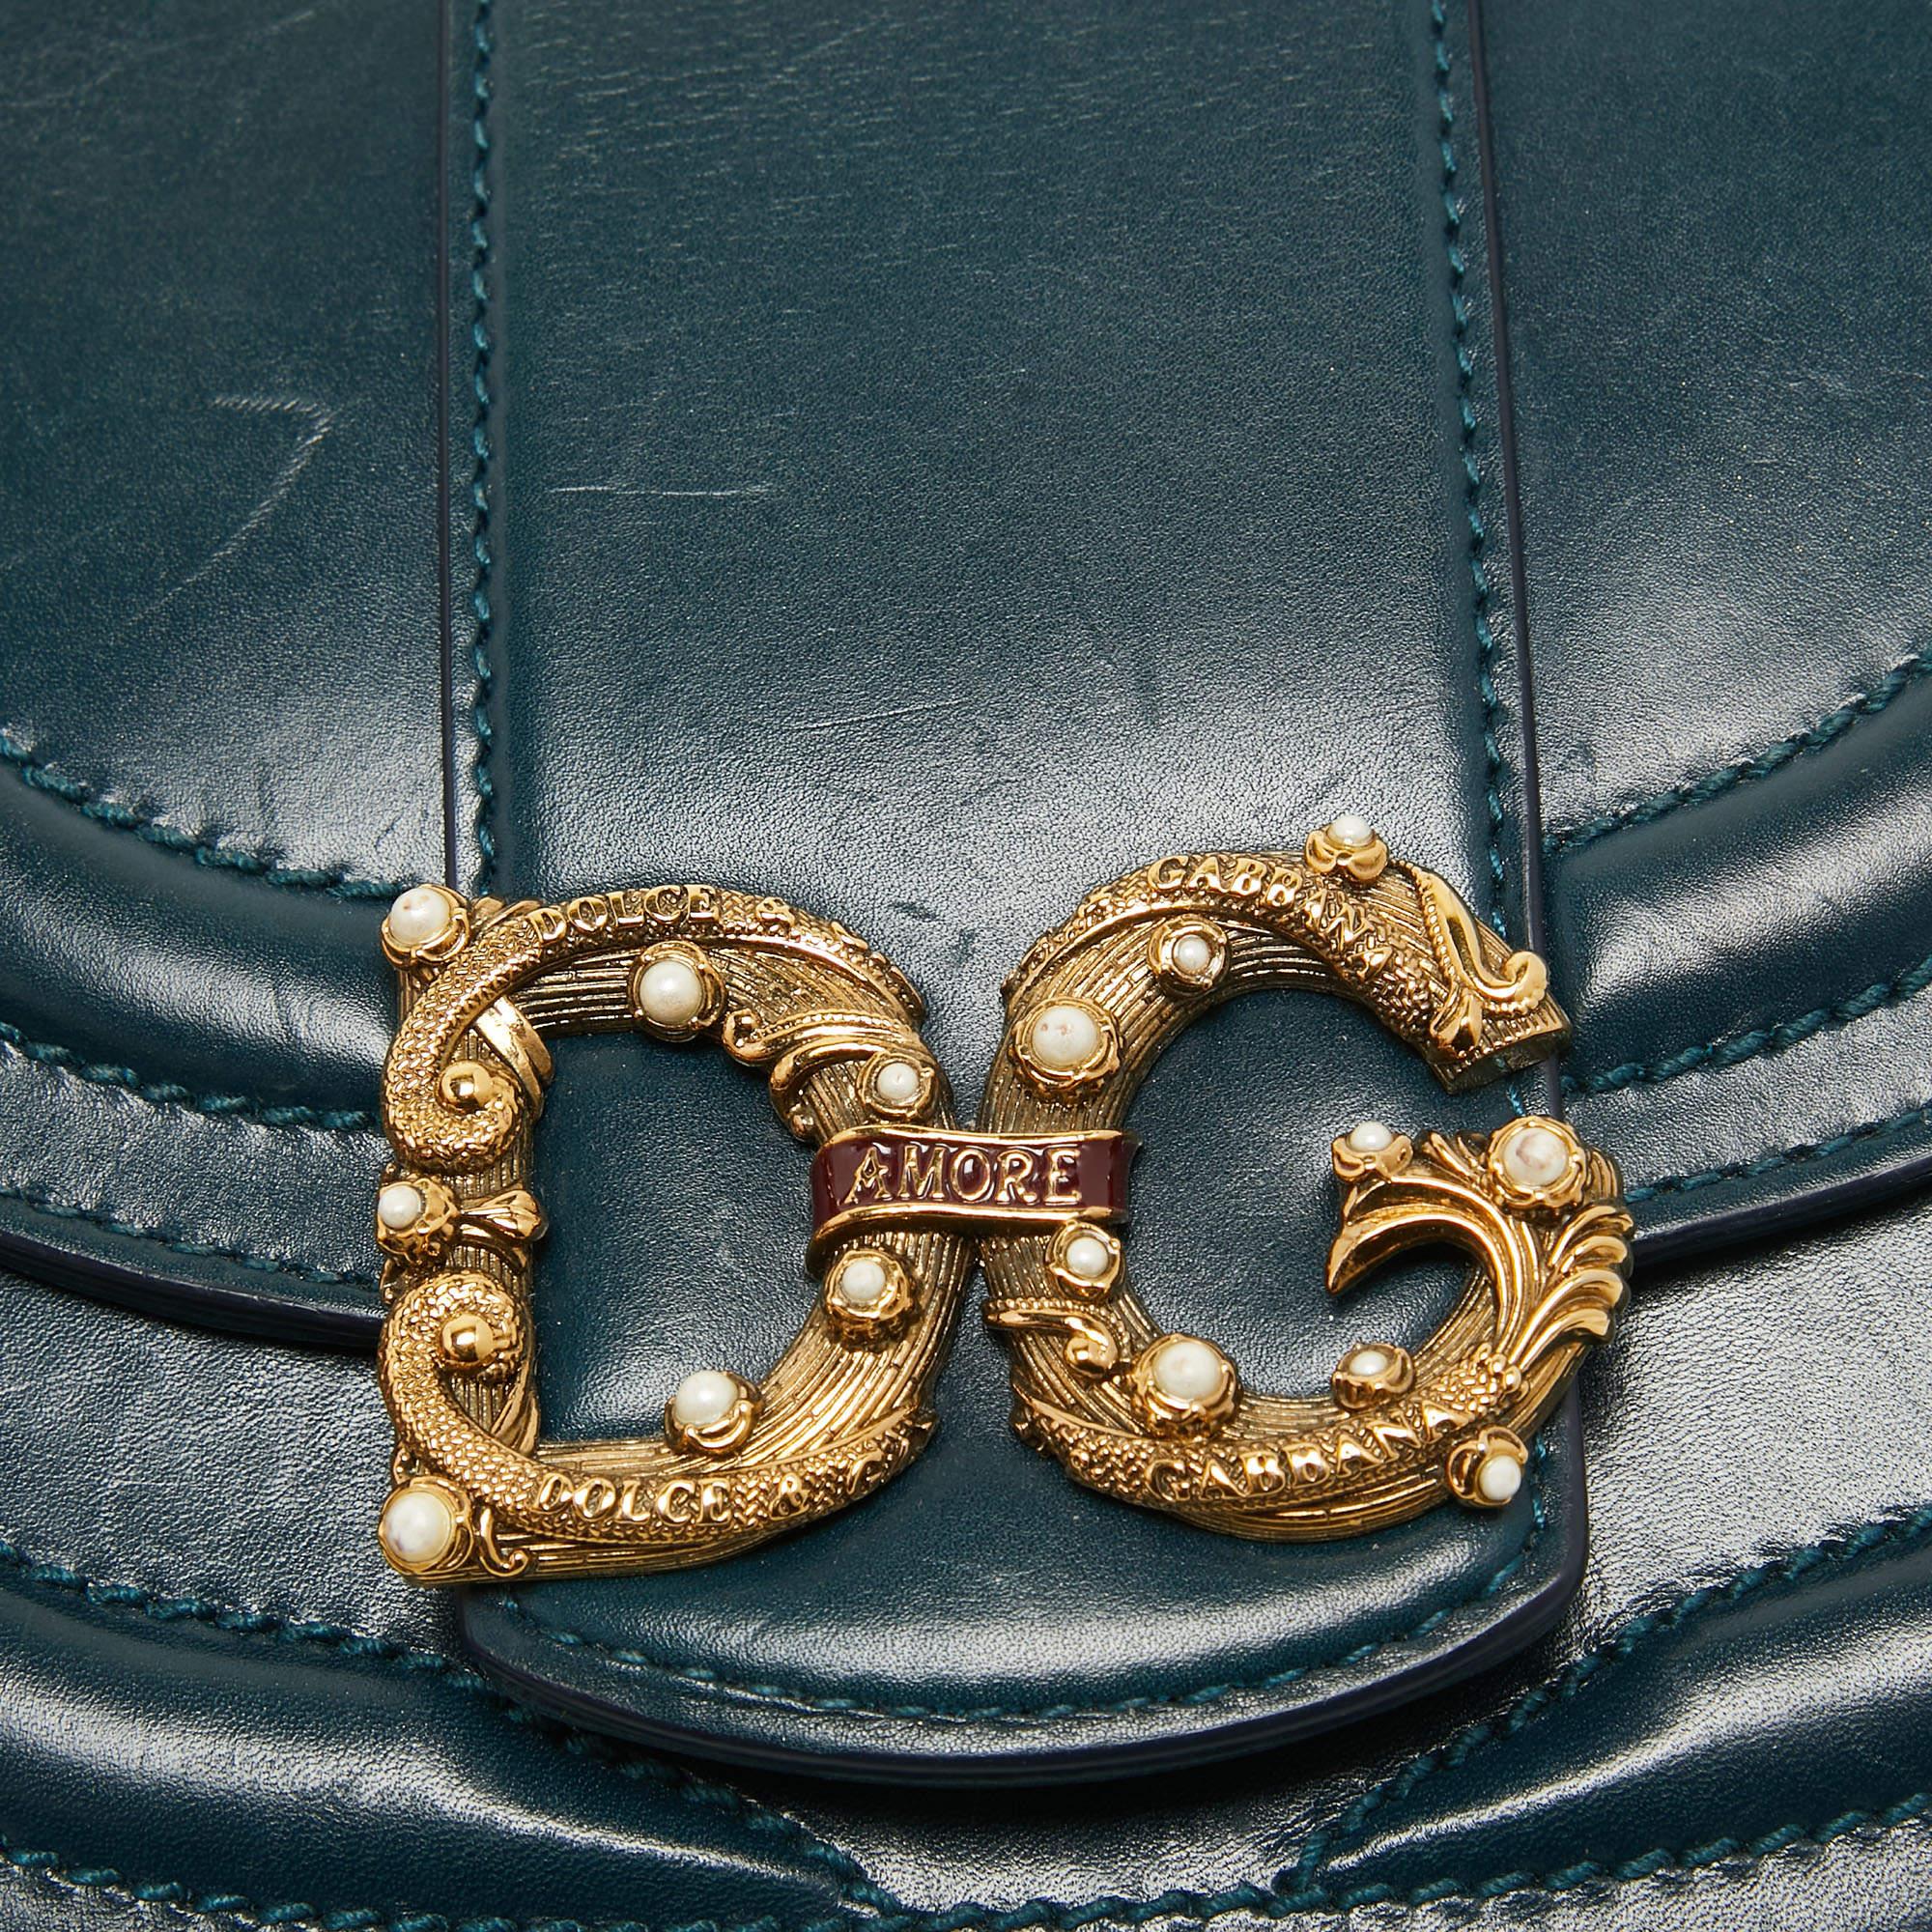 Dolce & Gabbana Teal Leather Amore Crossbody Bag 2